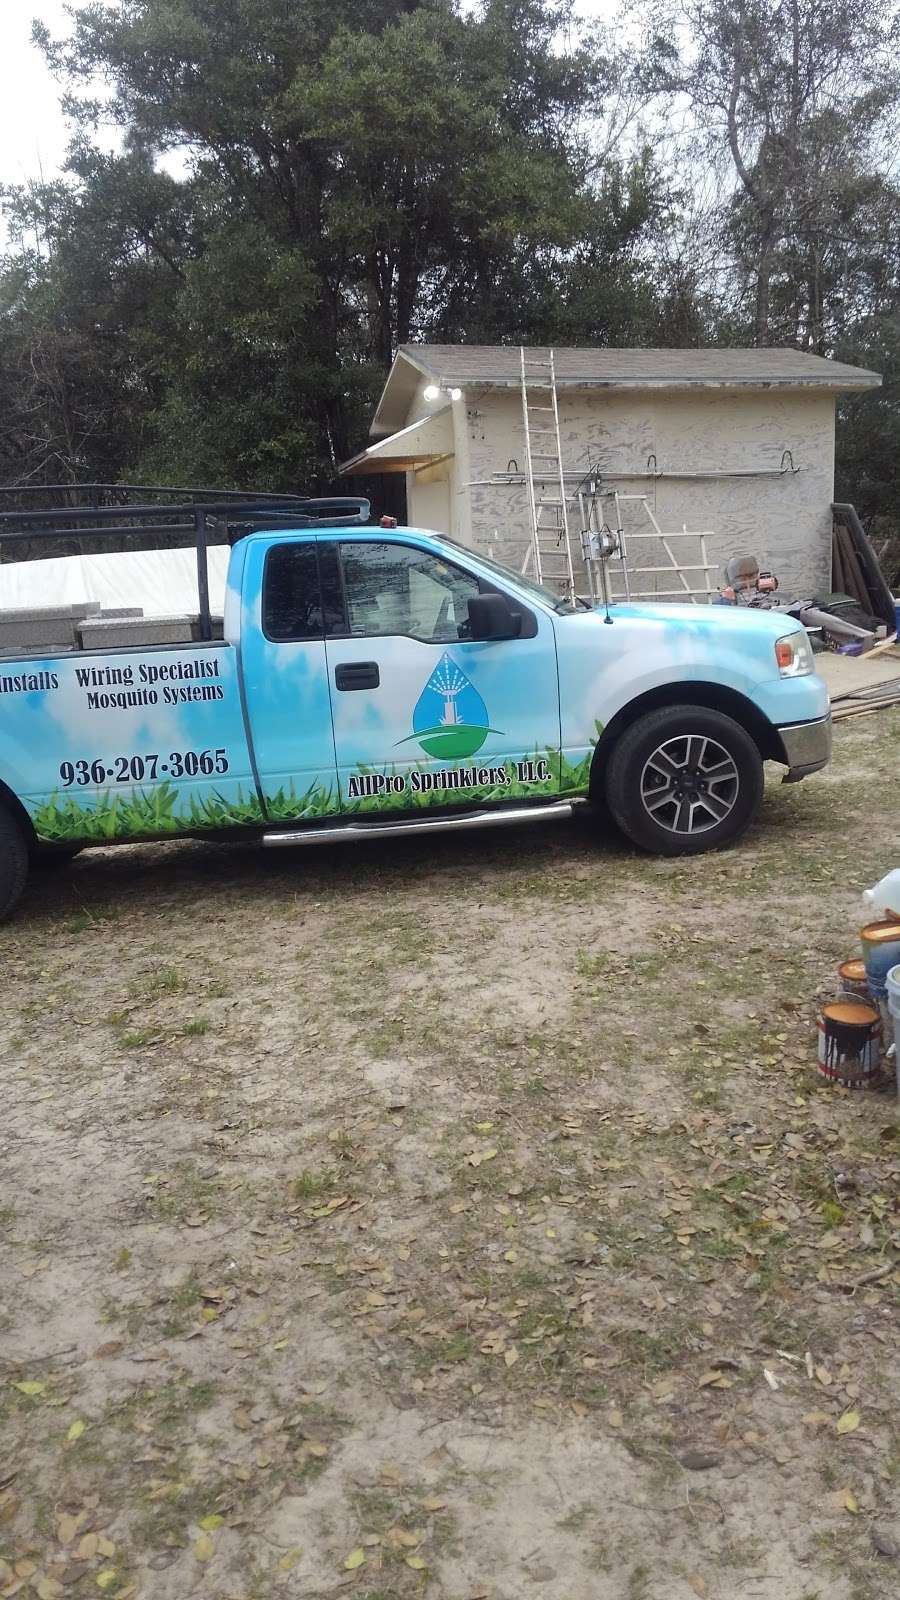 AllPro Sprinklers, LLC | 15130 Bart Lake Rd, Conroe, TX 77303, USA | Phone: (936) 241-4682